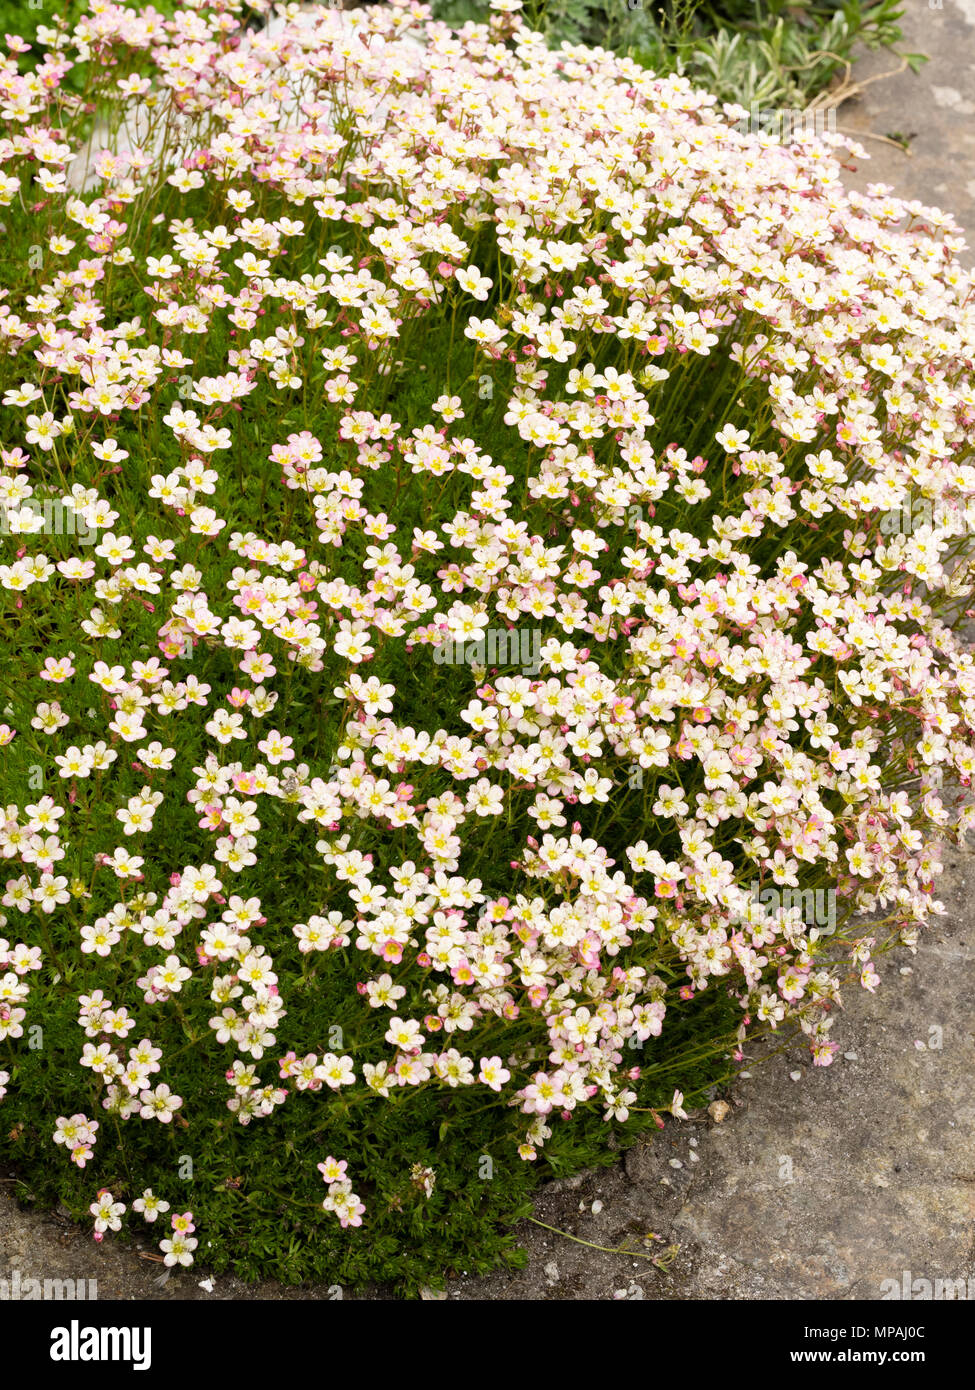 Rosa pallido e bianco forma di muschio, sassifraga Saxifraga x arendsii, fioritura a inizio estate Foto Stock